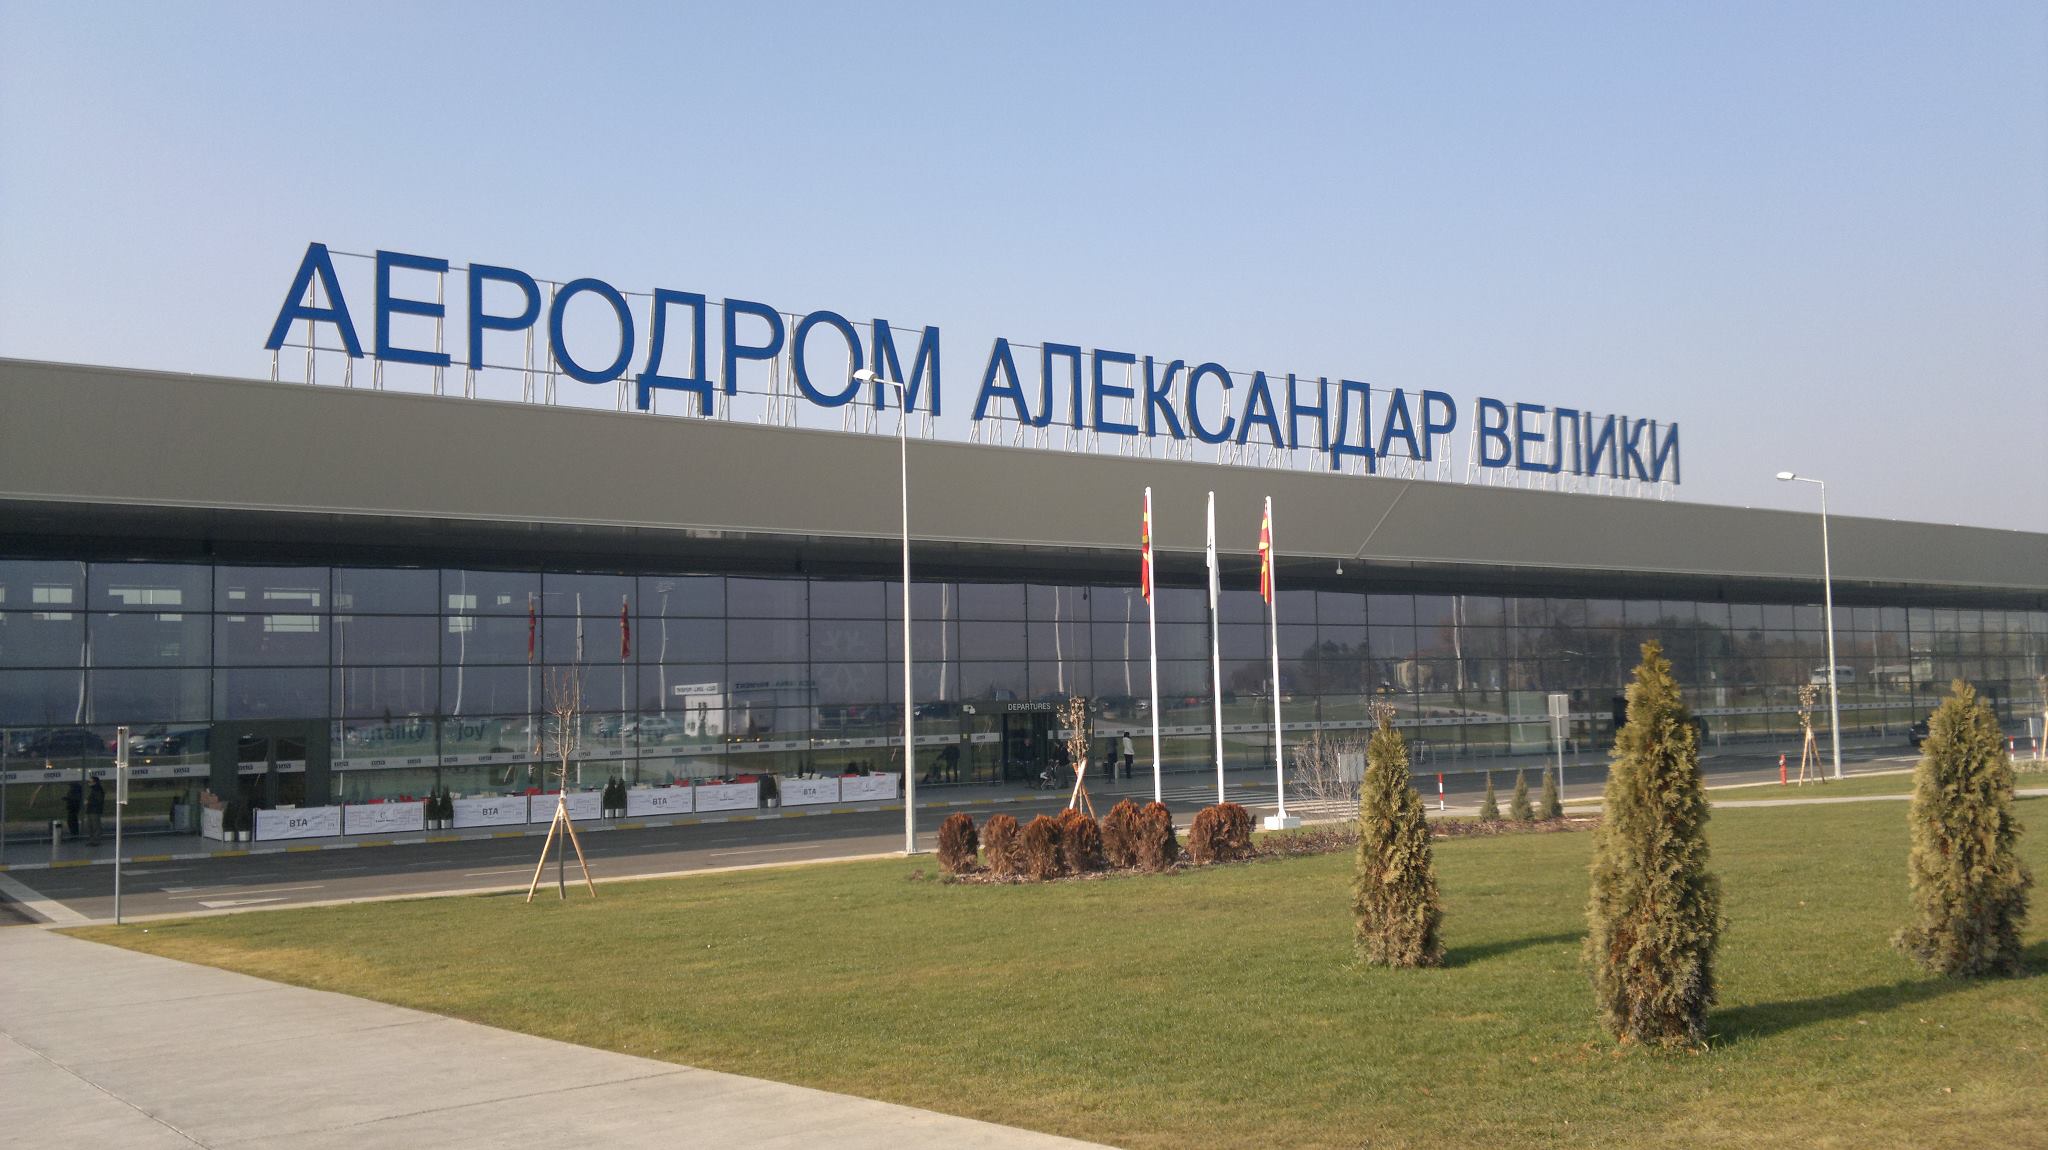 Airport Alexander The Greate in Skopje, Macedonia